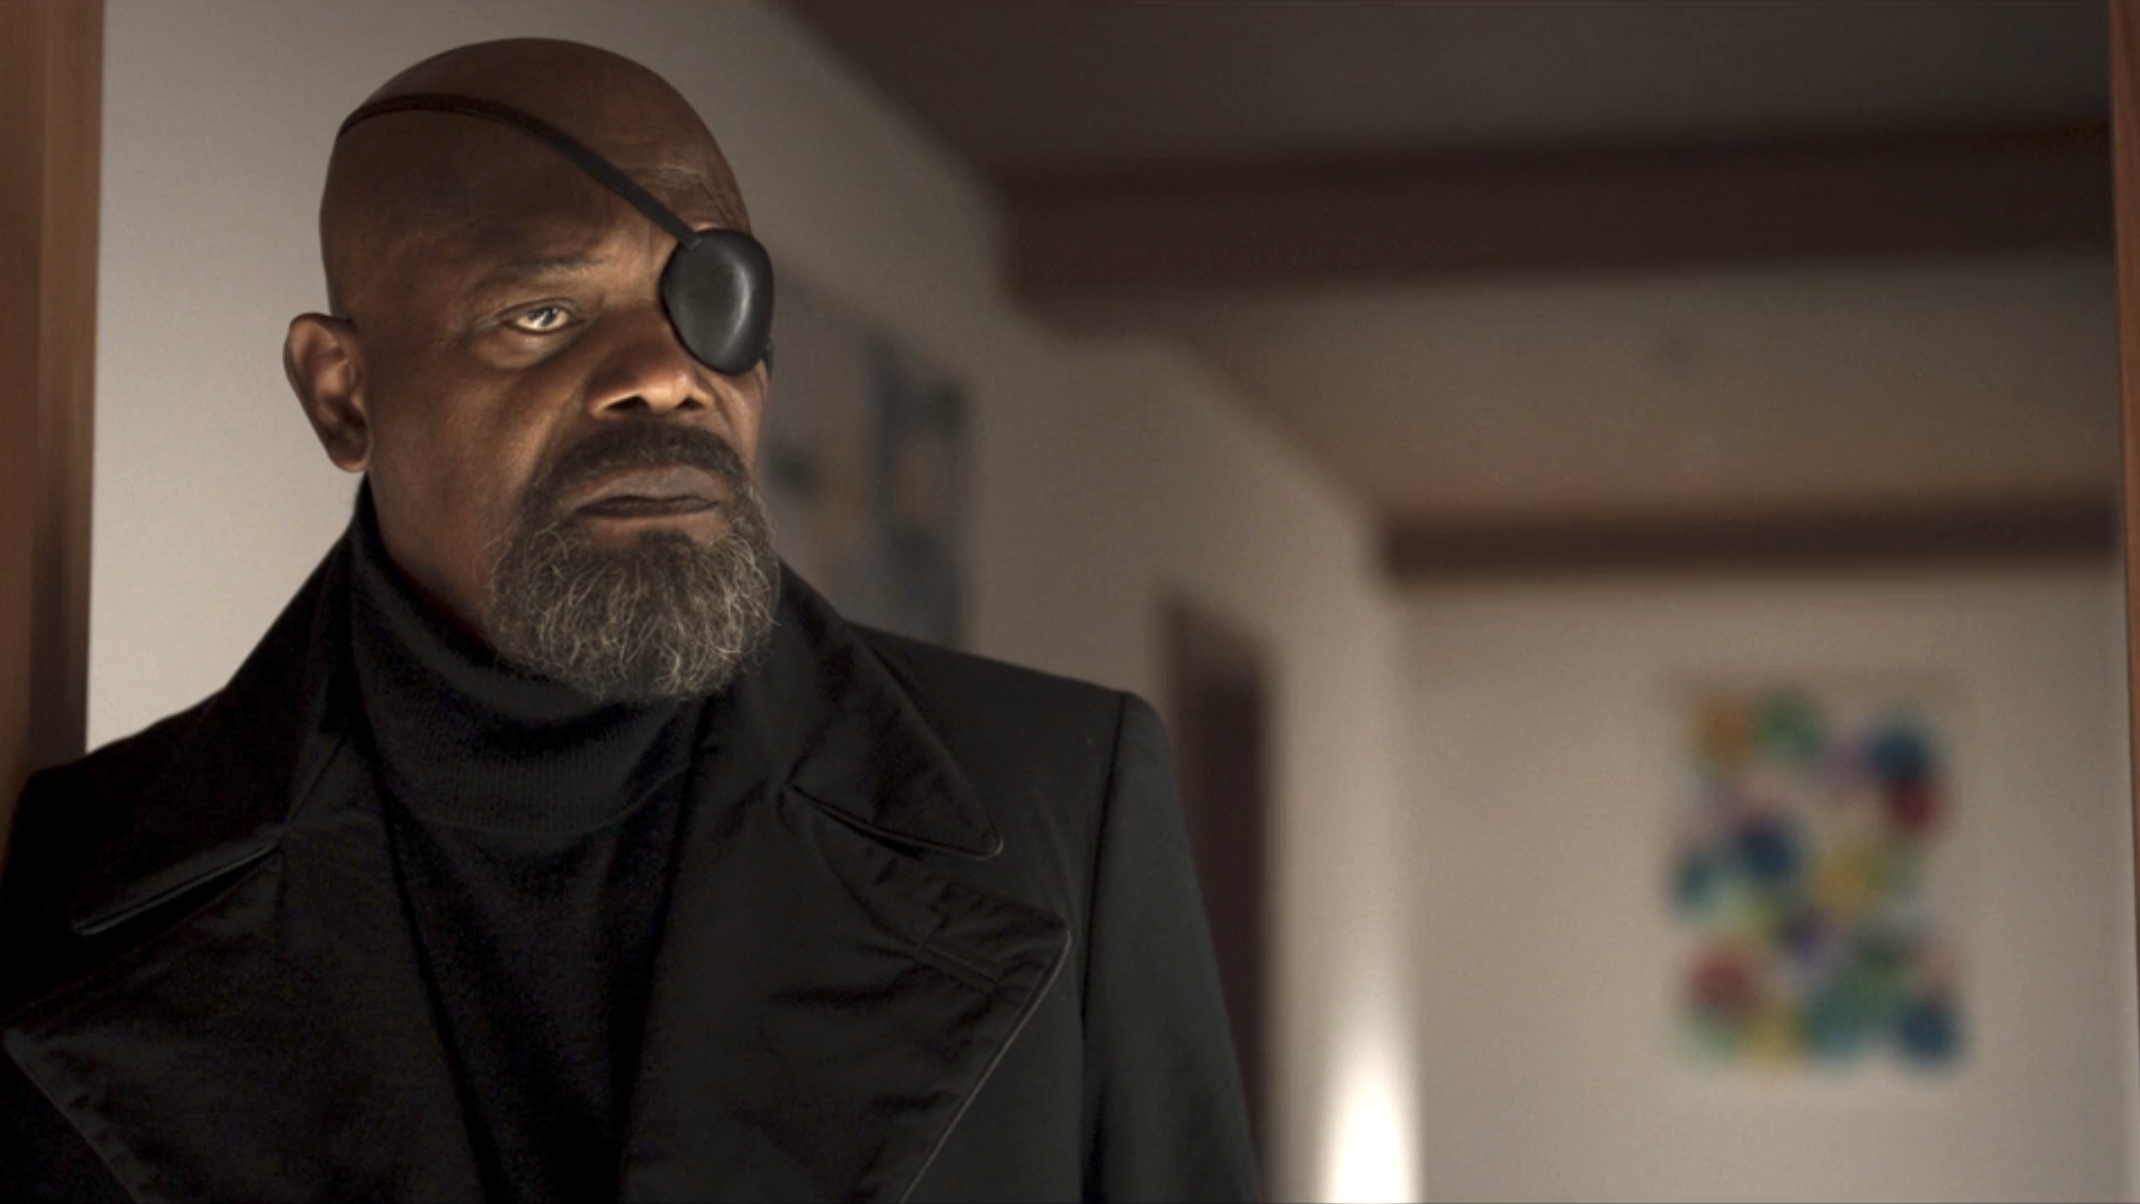 G'iah as Nick Fury, Secret Invasion Ep. 6 in 2023